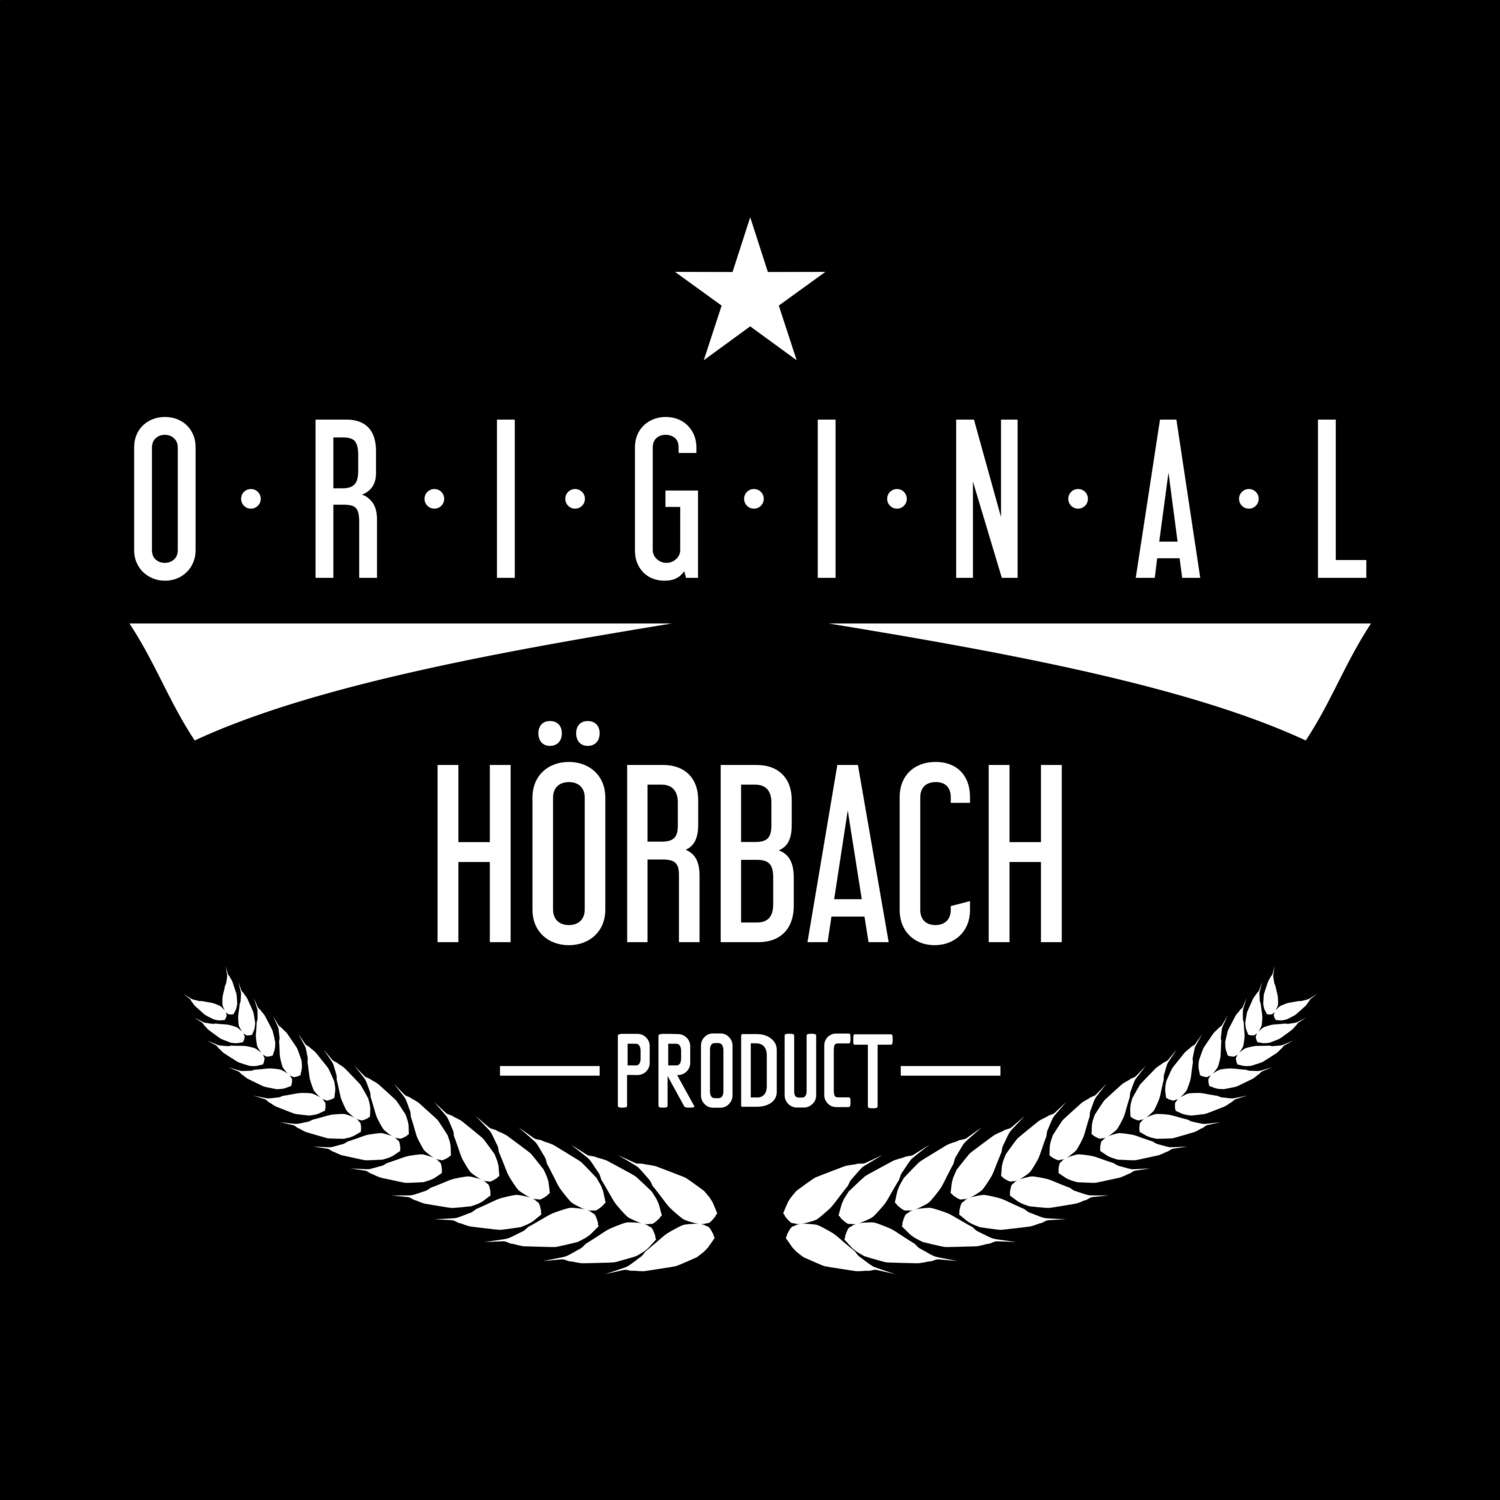 Hörbach T-Shirt »Original Product«